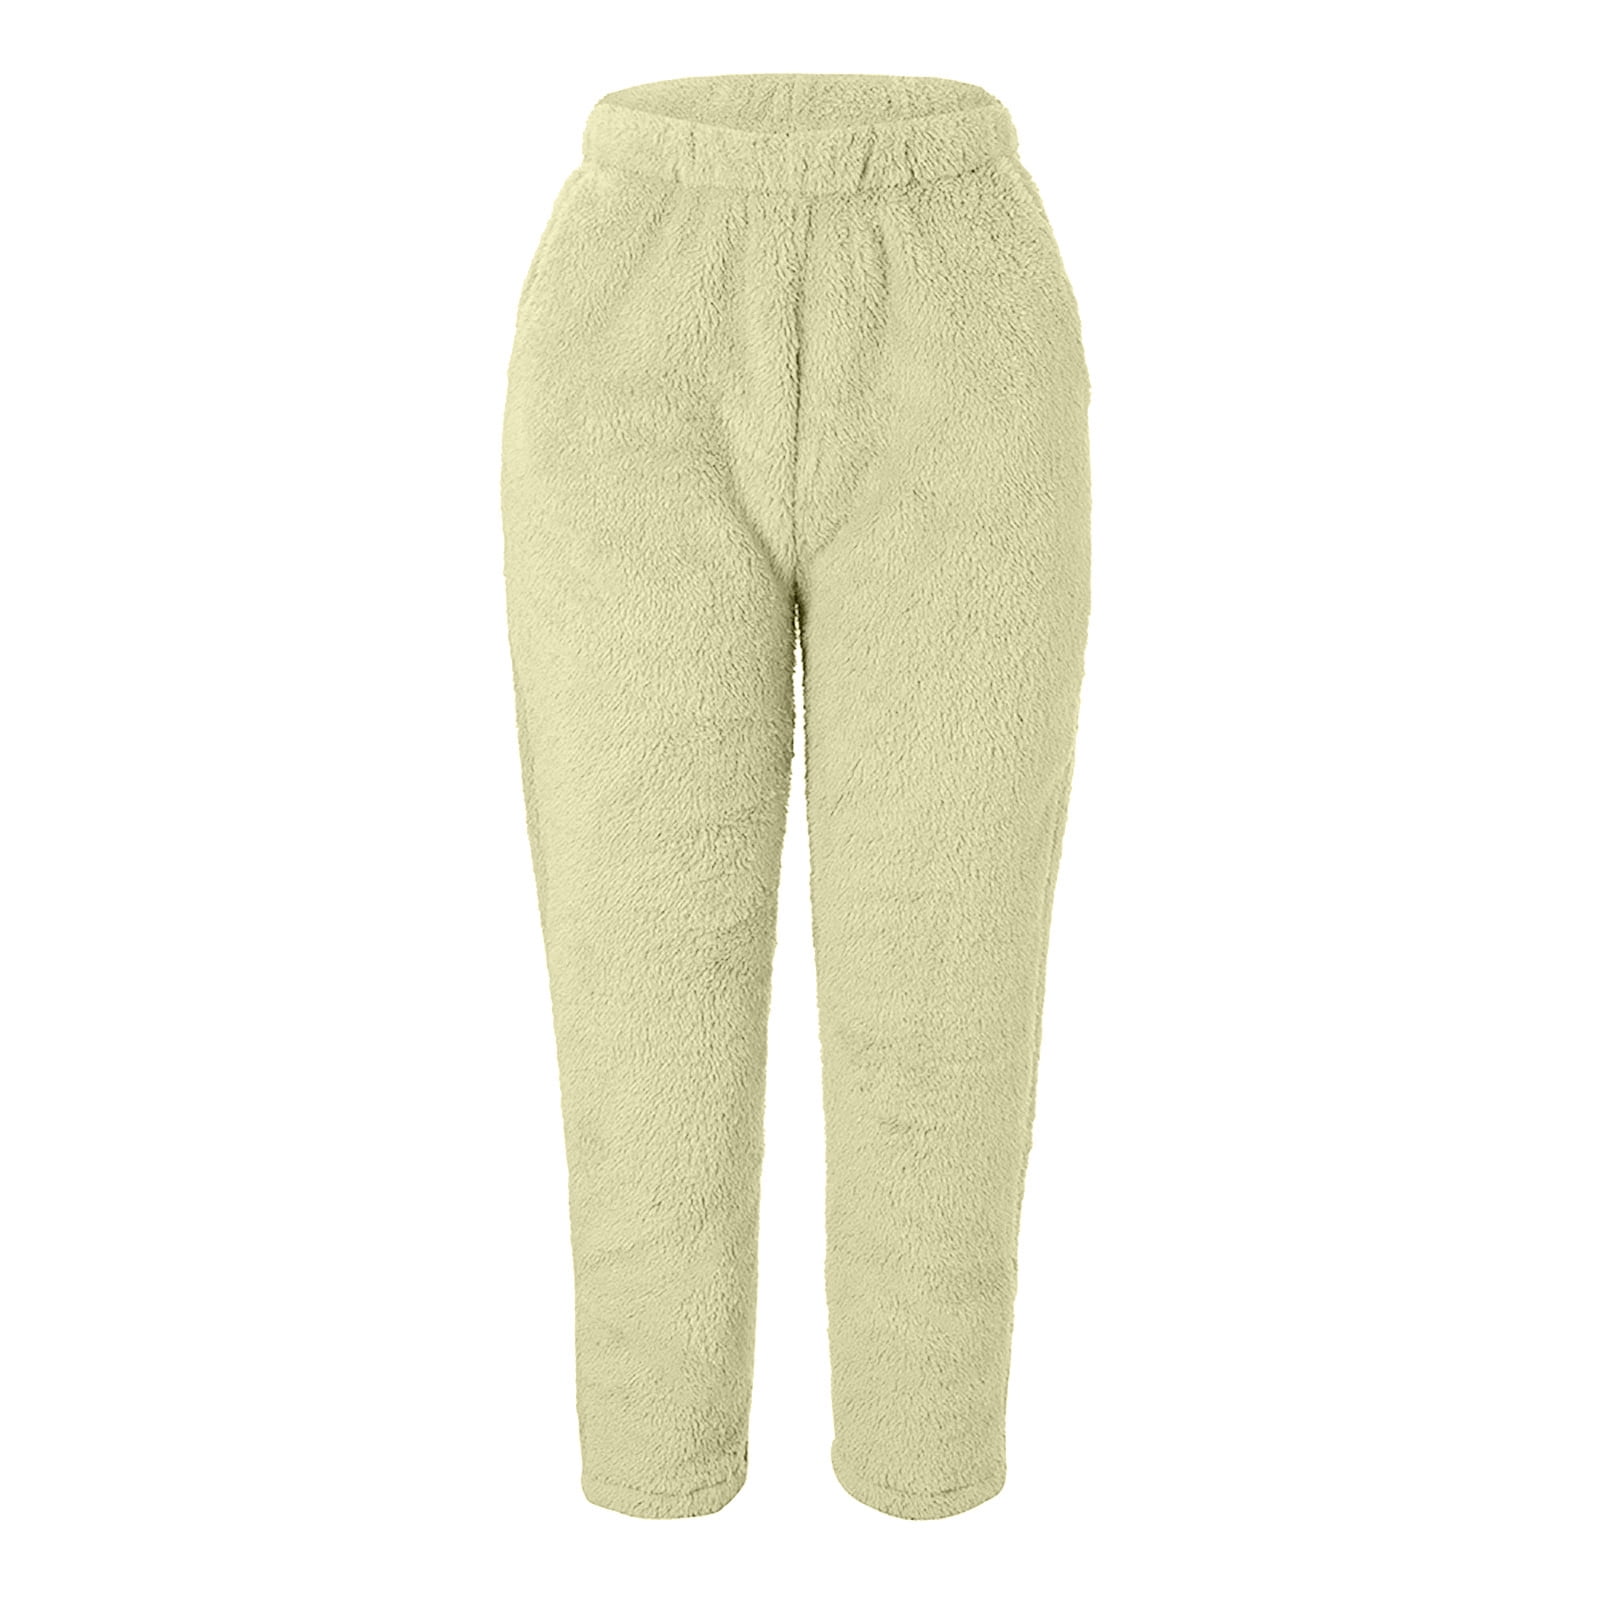 Fuzzy Fleece Pants for Women Soft Warm Faux Shearling Elastic Waist Loose  Pajama Bottoms Plus Size Loungewear (Large, Black) 